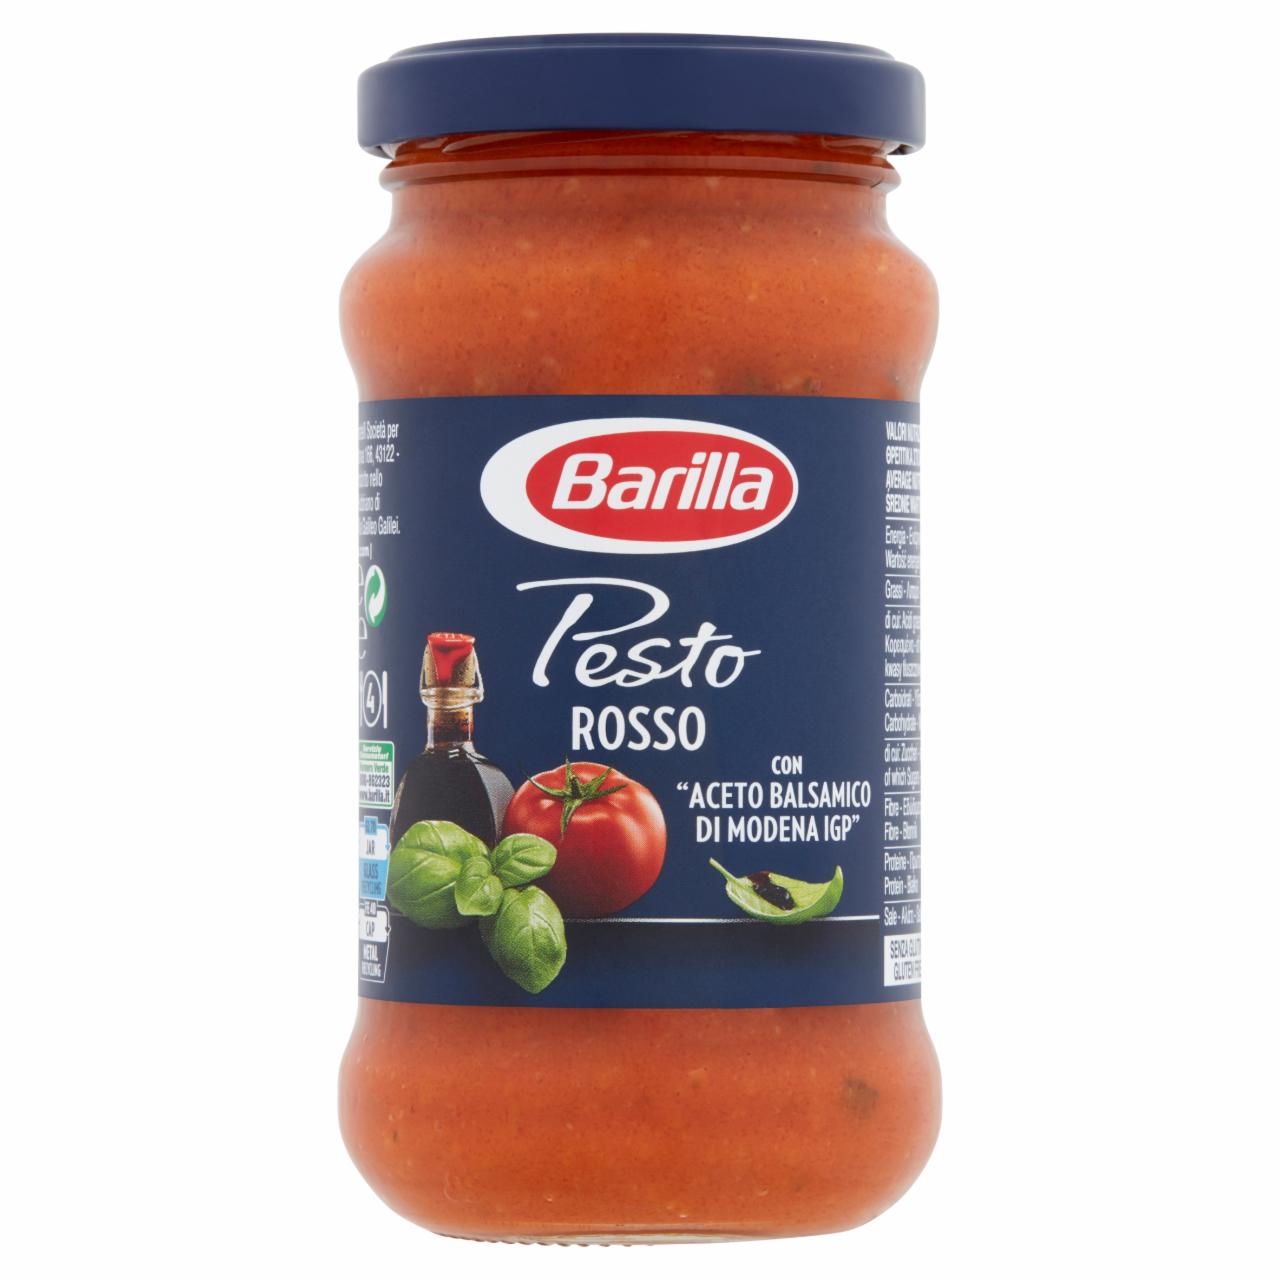 Photo - Barilla Pesto Rosso Red Pesto Sauce with Tomato, Basil and Balsamic Vinegar of Modena 200 g